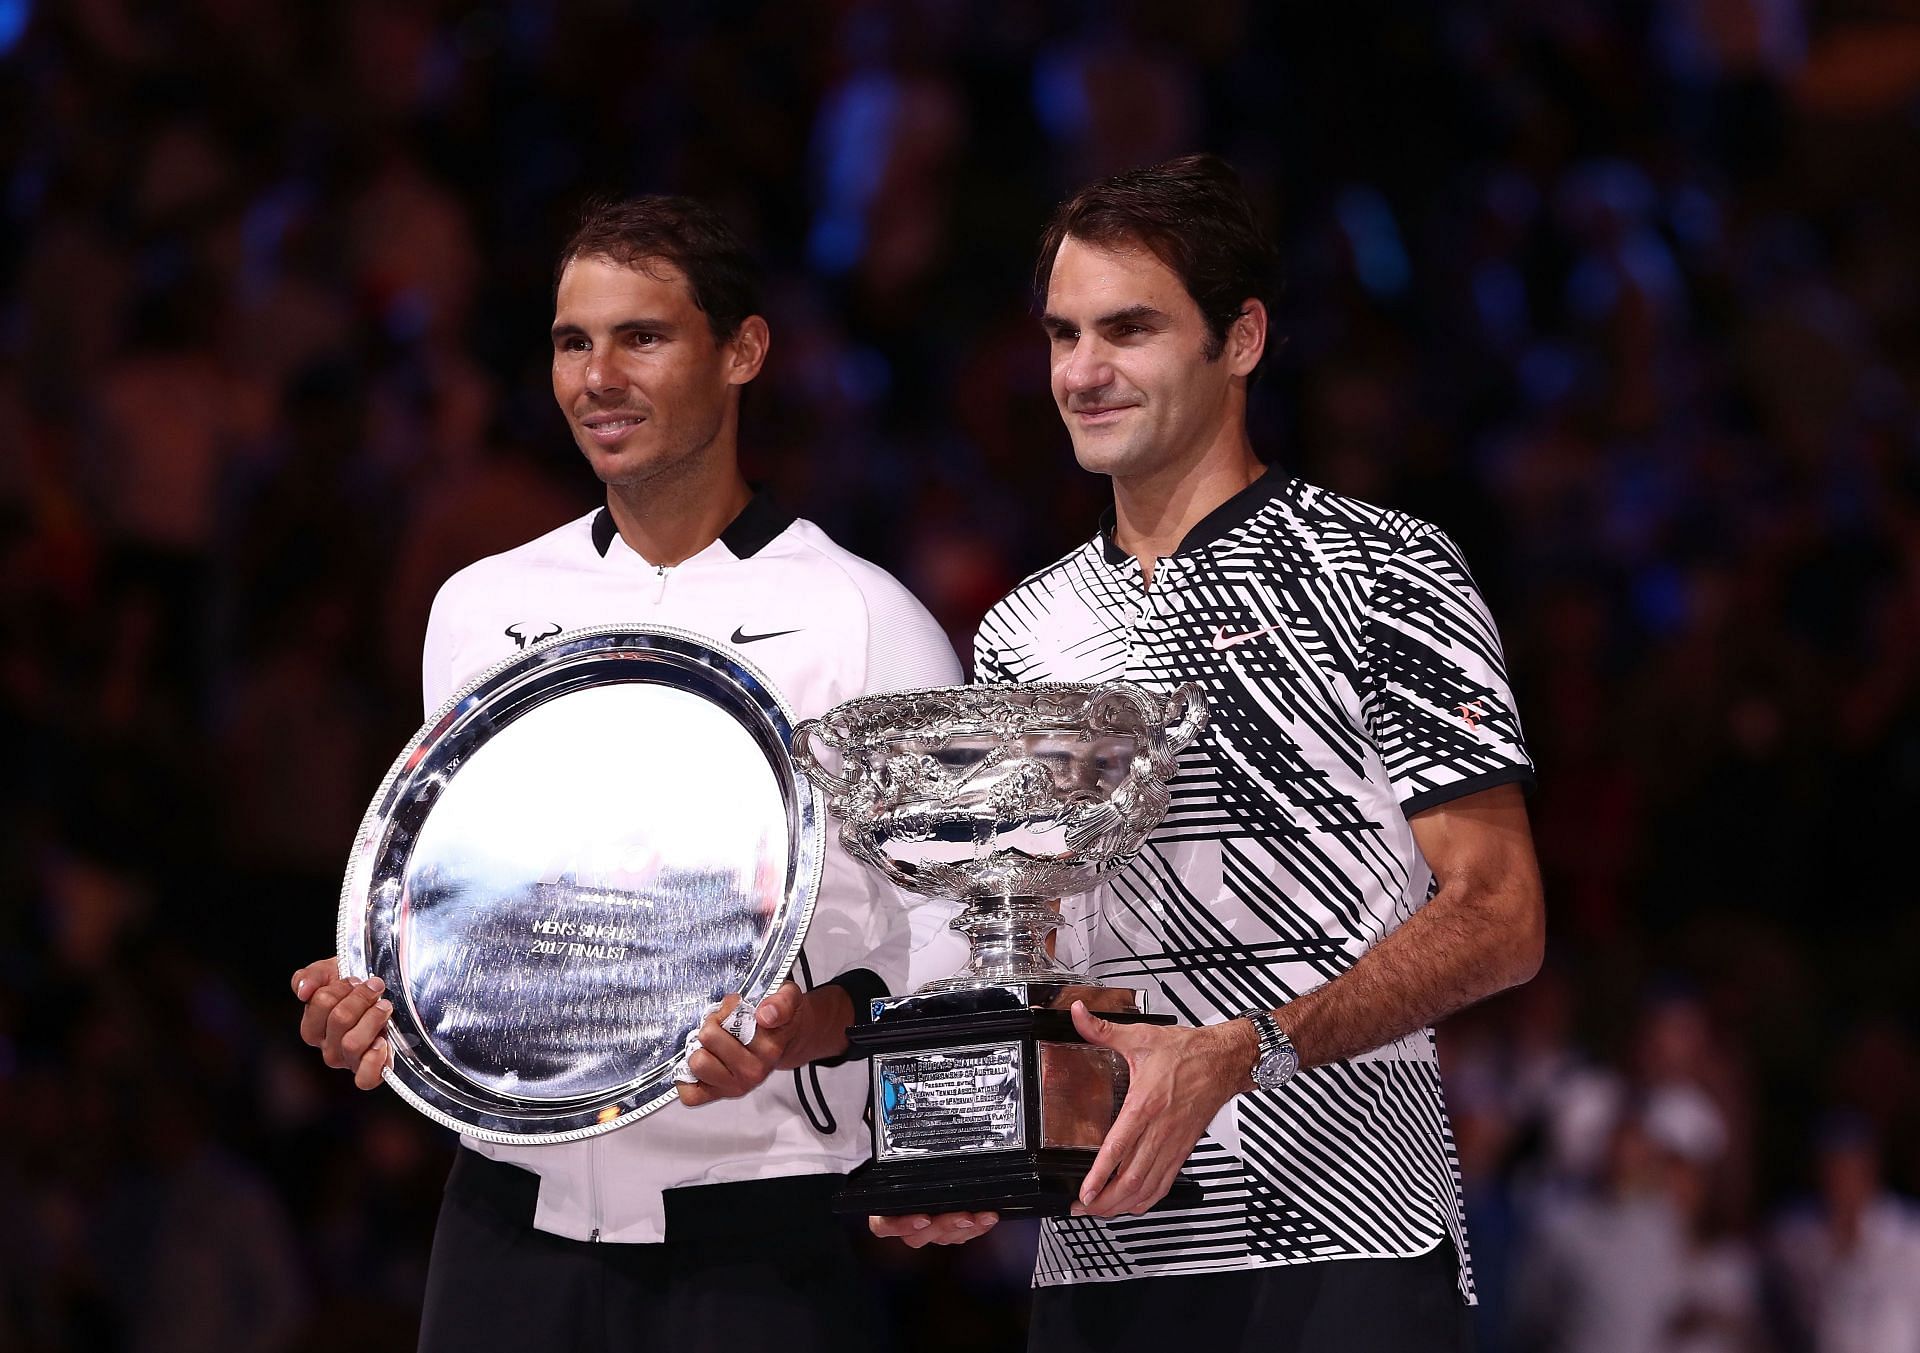 Rafael Nadal and Roger Federer at the Australian Open 2017